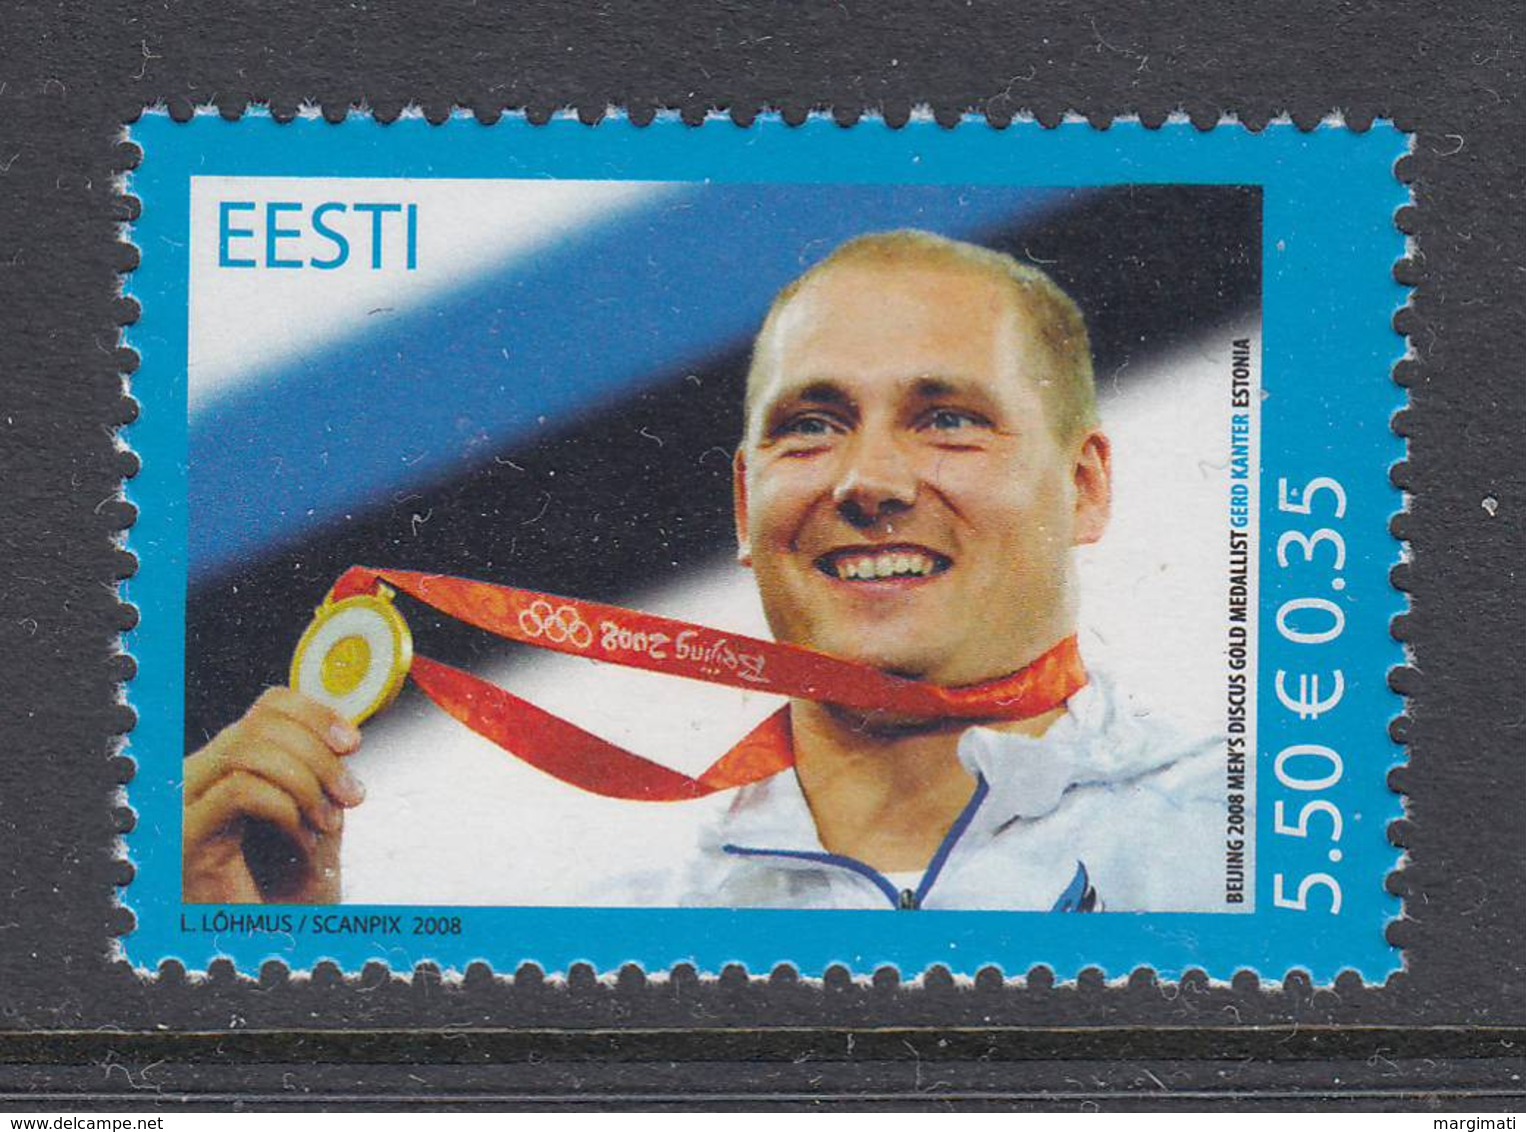 Estland 2008. Gerd Kanter, Olympic Gold Medallist. MNH. Pf. - Estonia